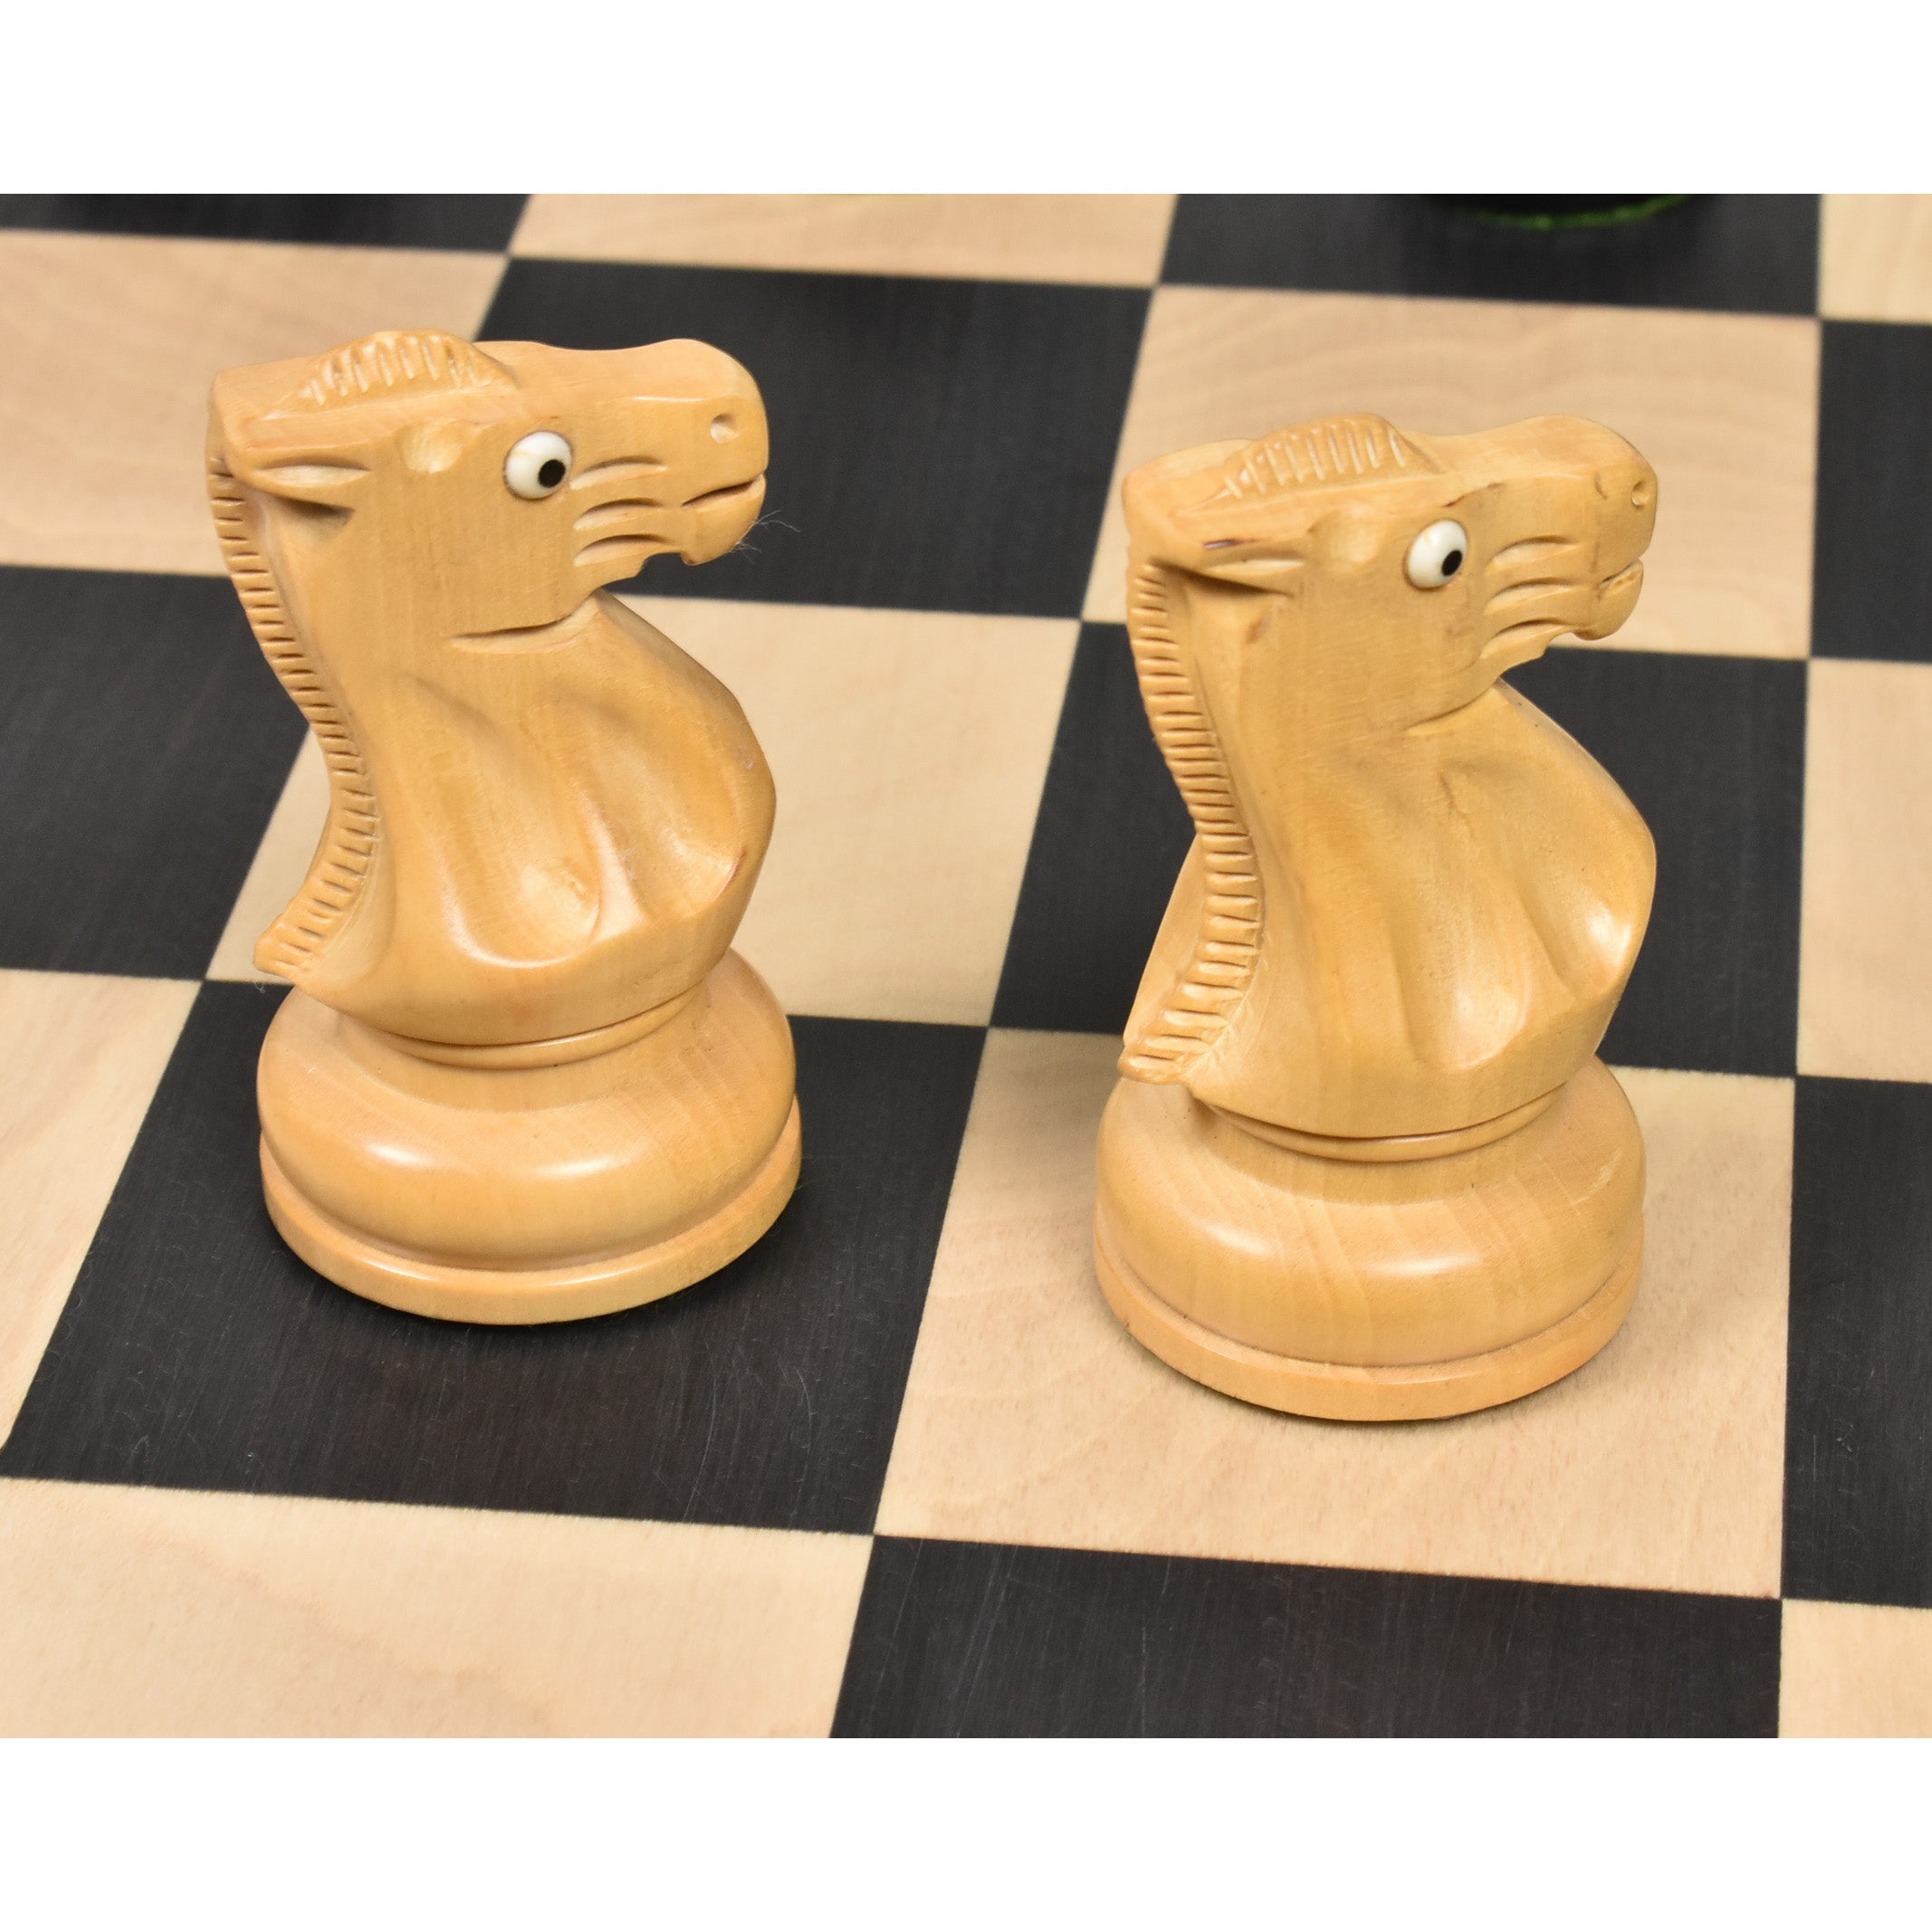 Russian Chess Grandmaster Stock Photos - Free & Royalty-Free Stock